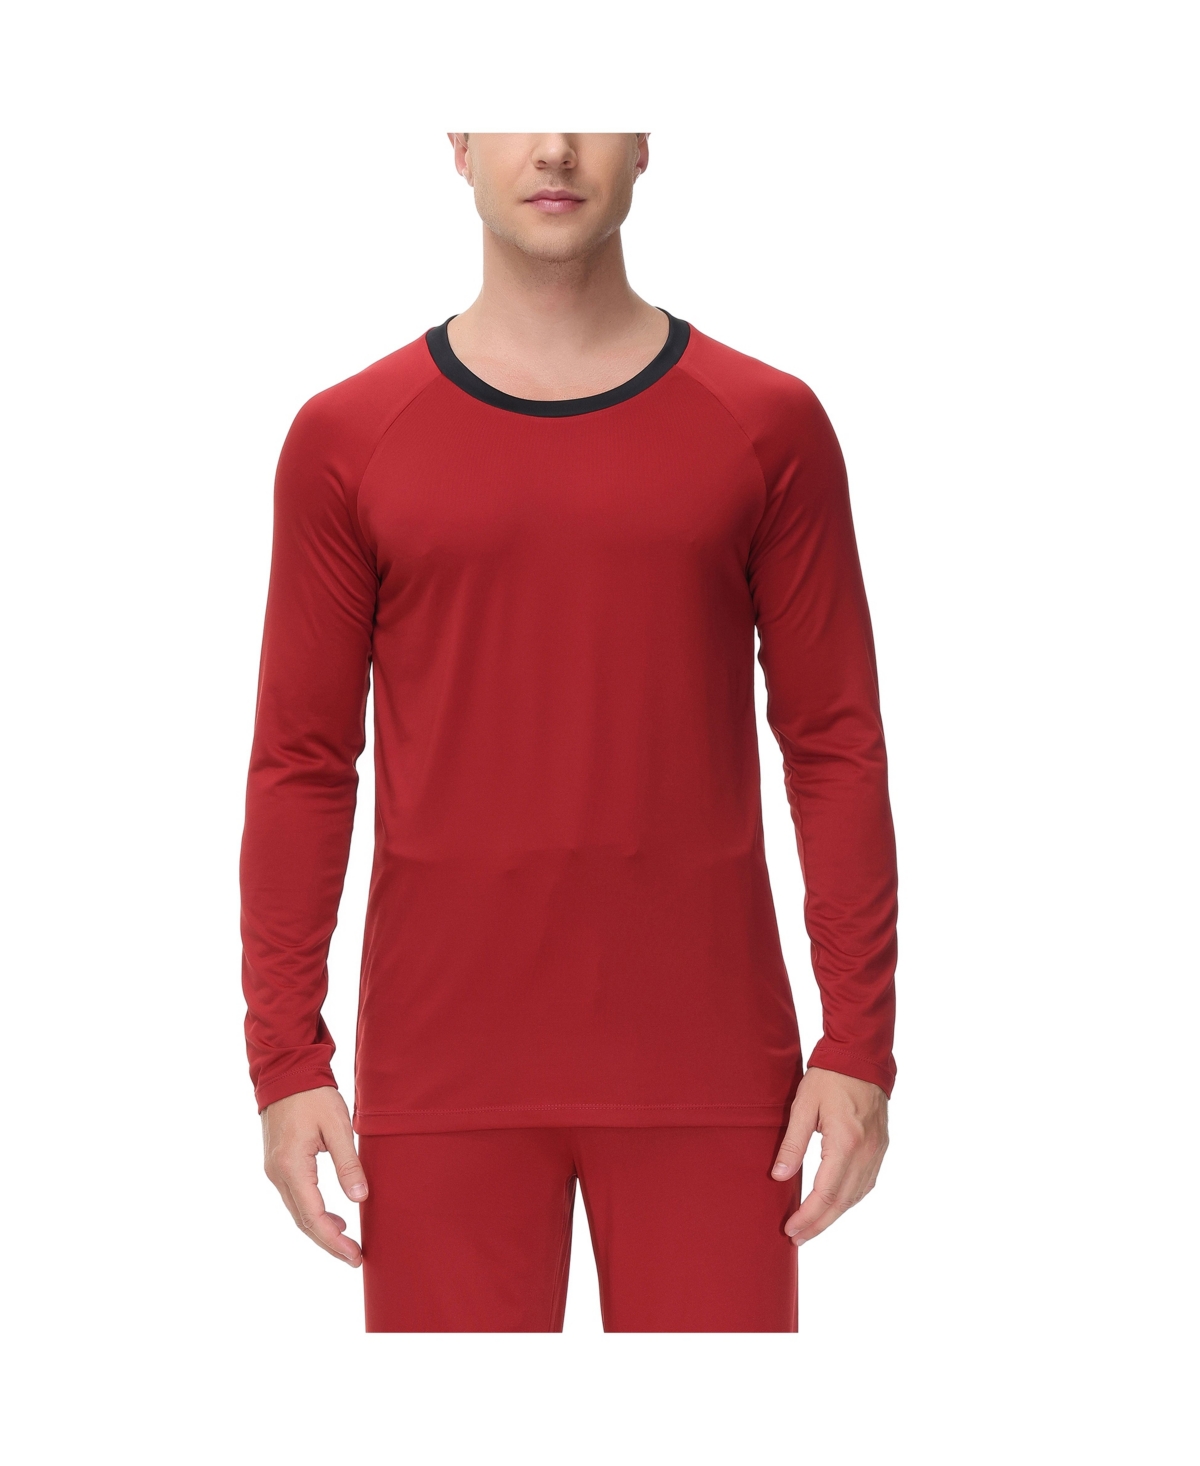 Men's Moisture-Wicking contrast Crewneck Lounge T-Shirt - Red